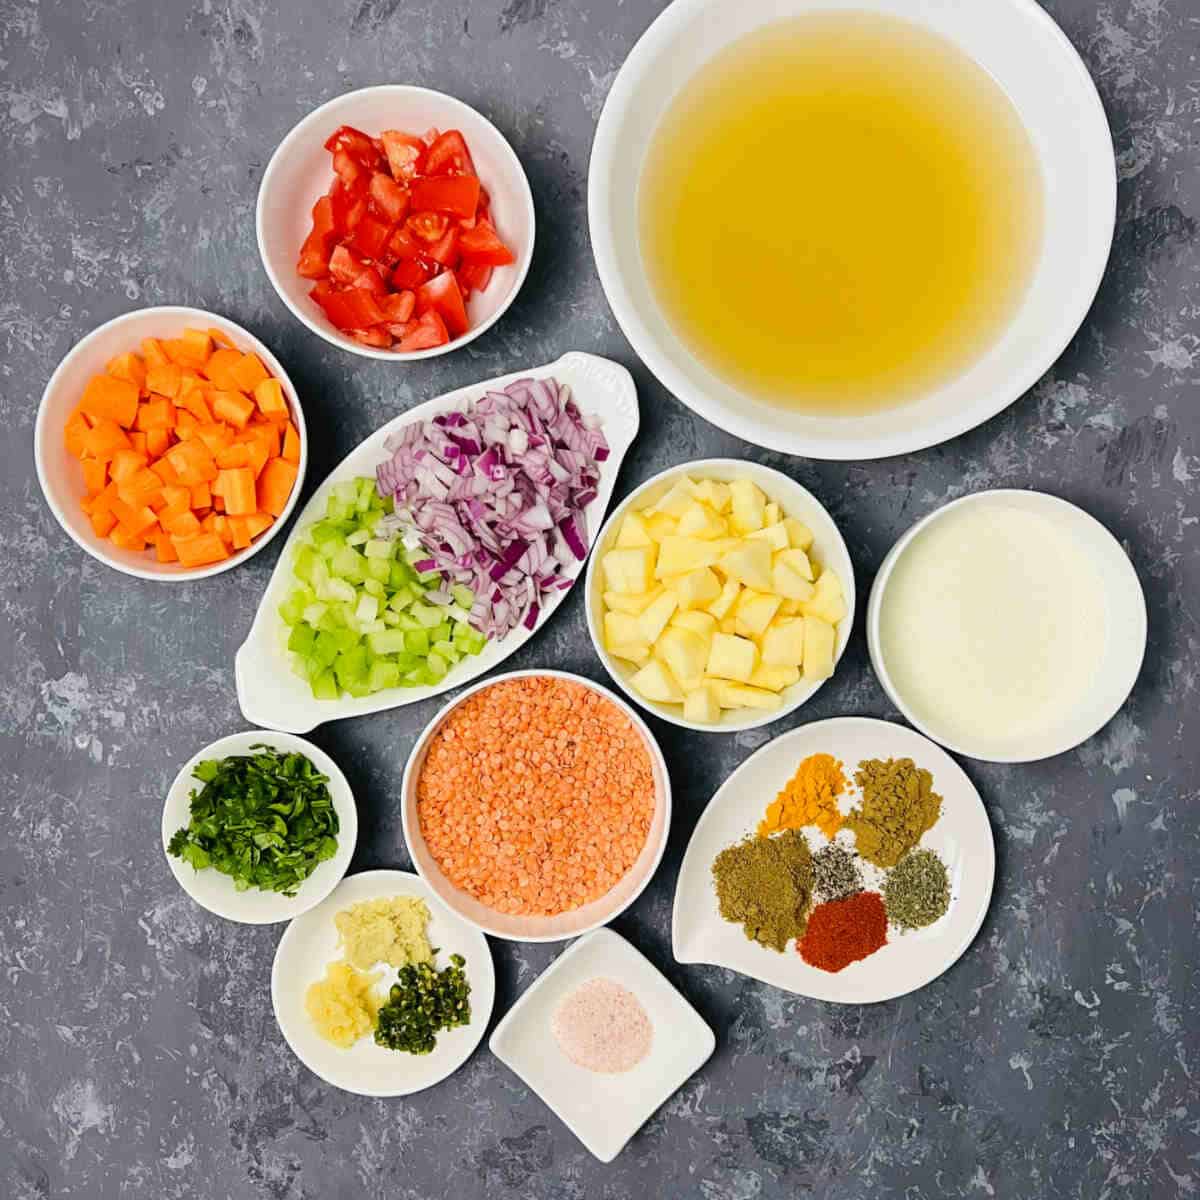 ingredients to make mulligatawny soup in instant pot